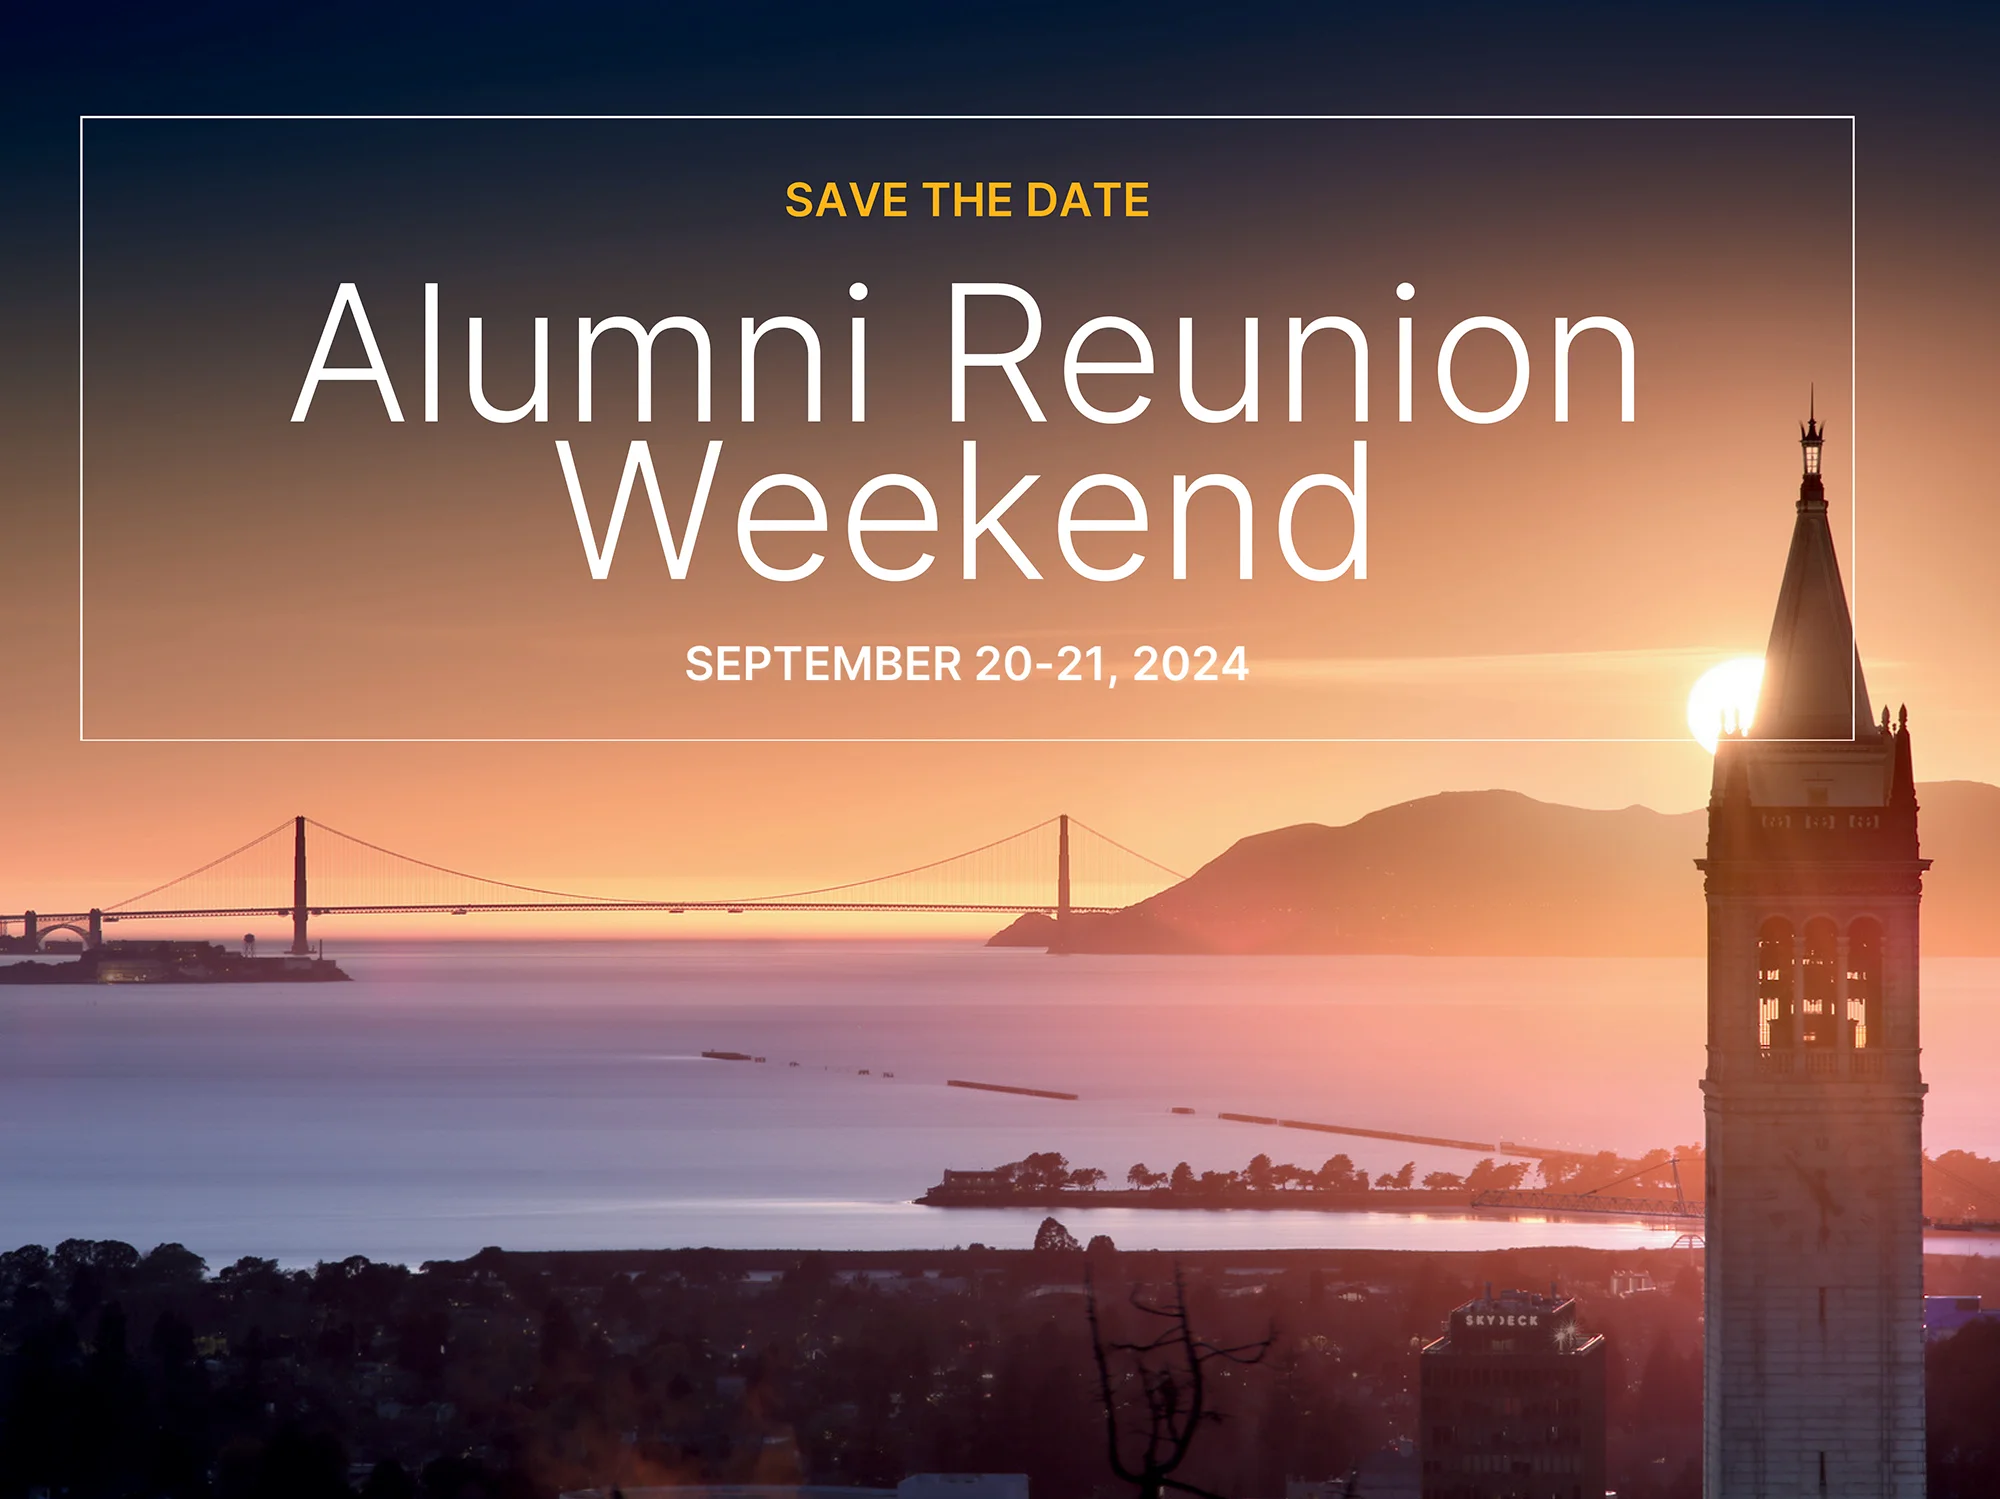 Alumni Reunion Weekend Advertisement